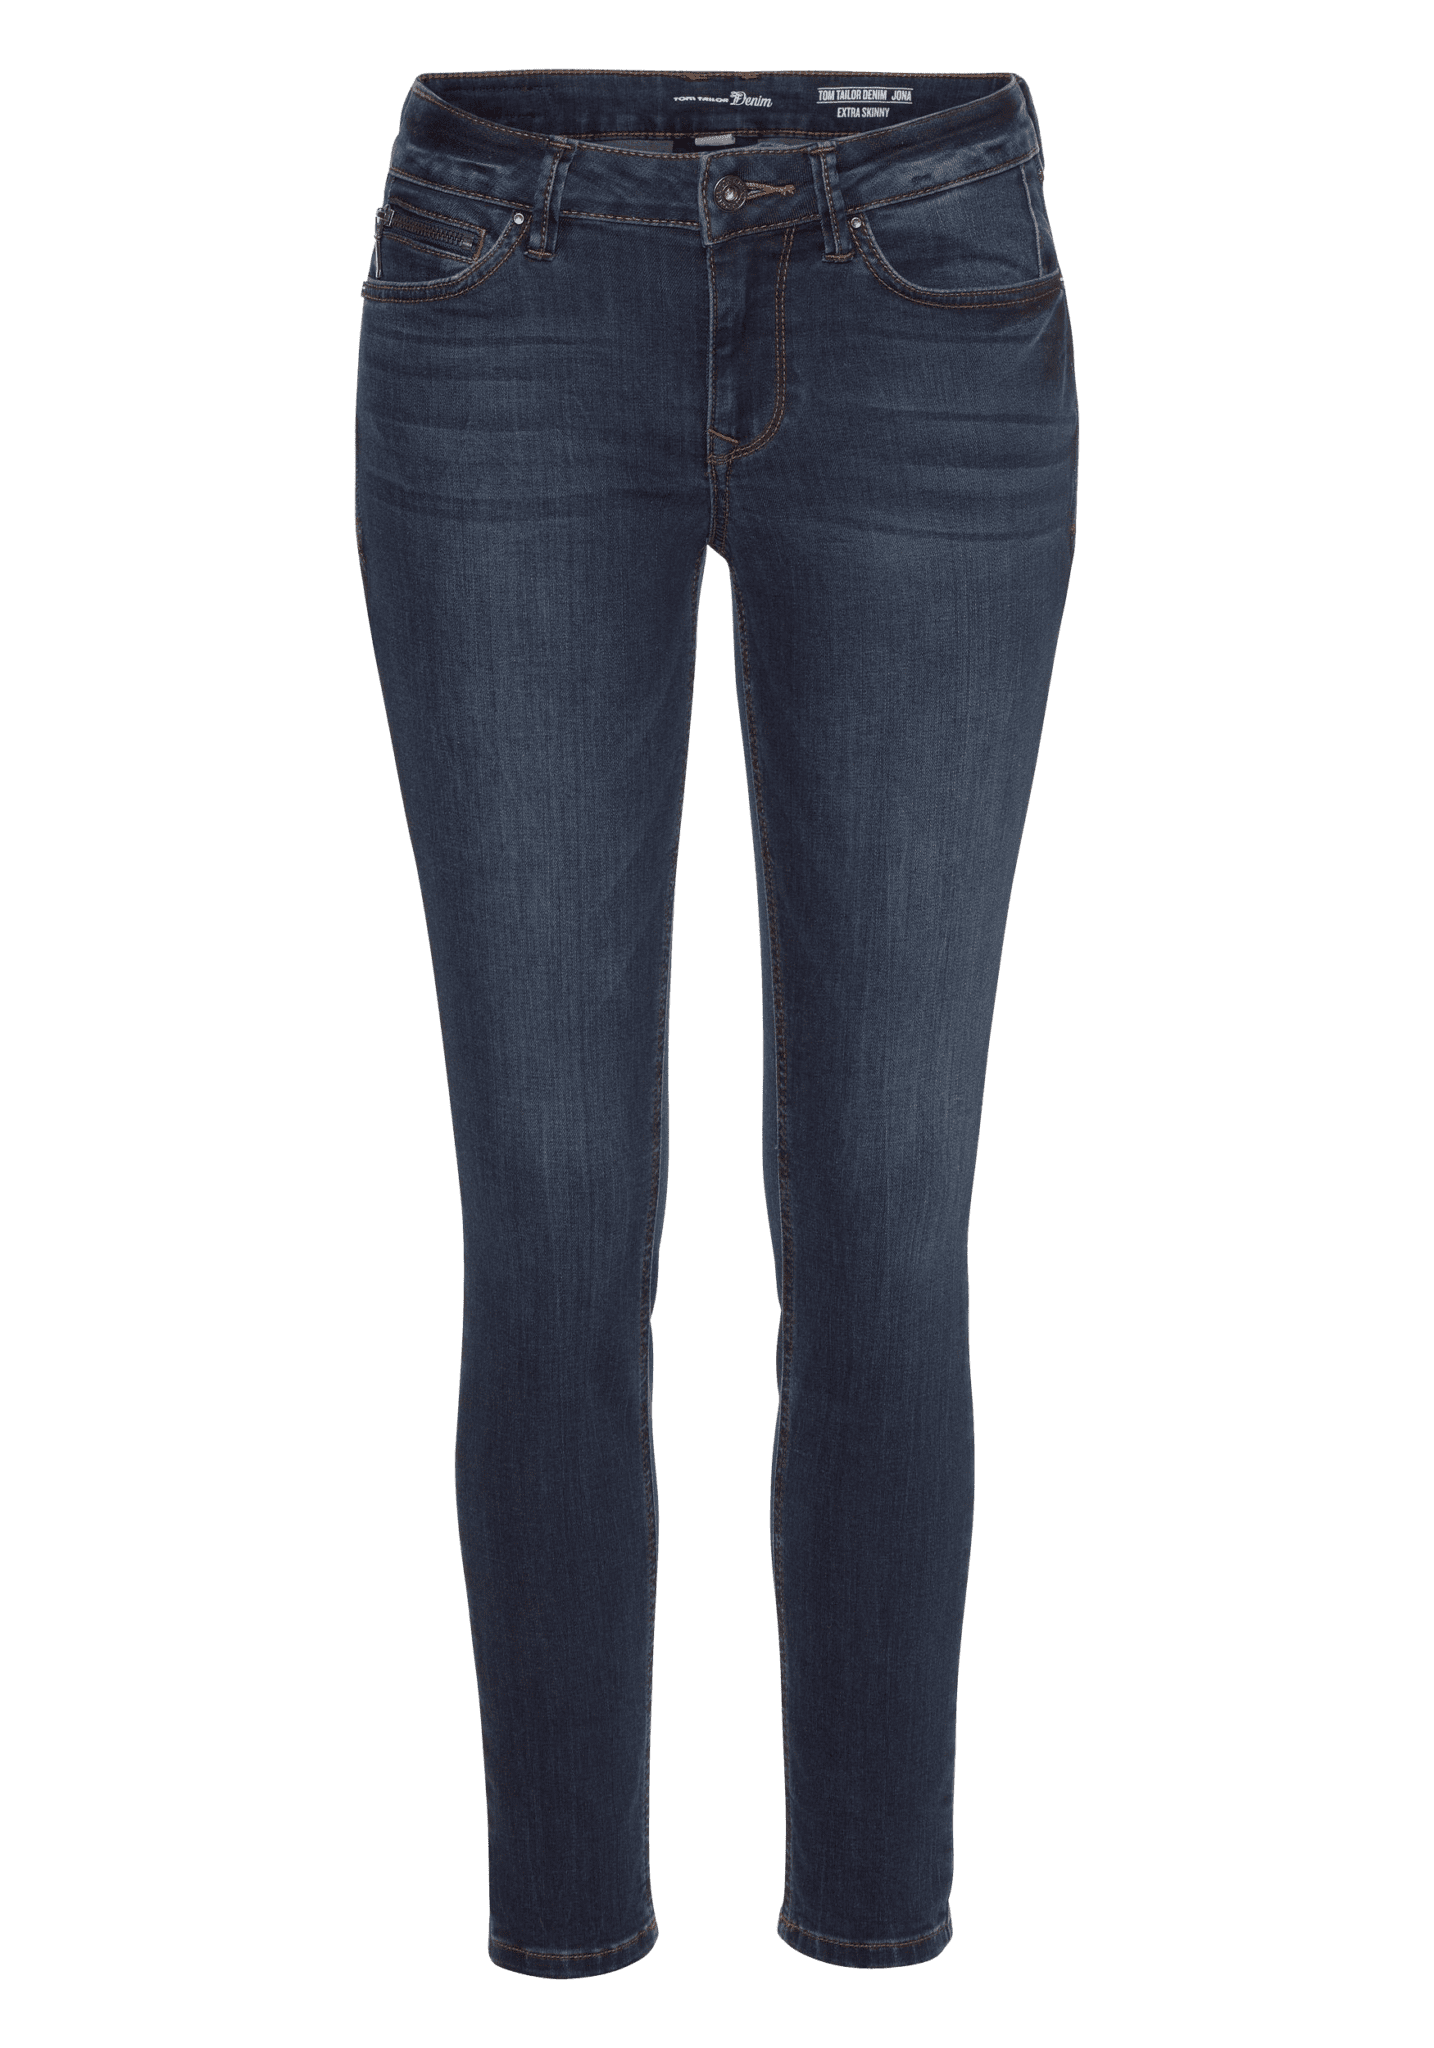 Low waist jeans